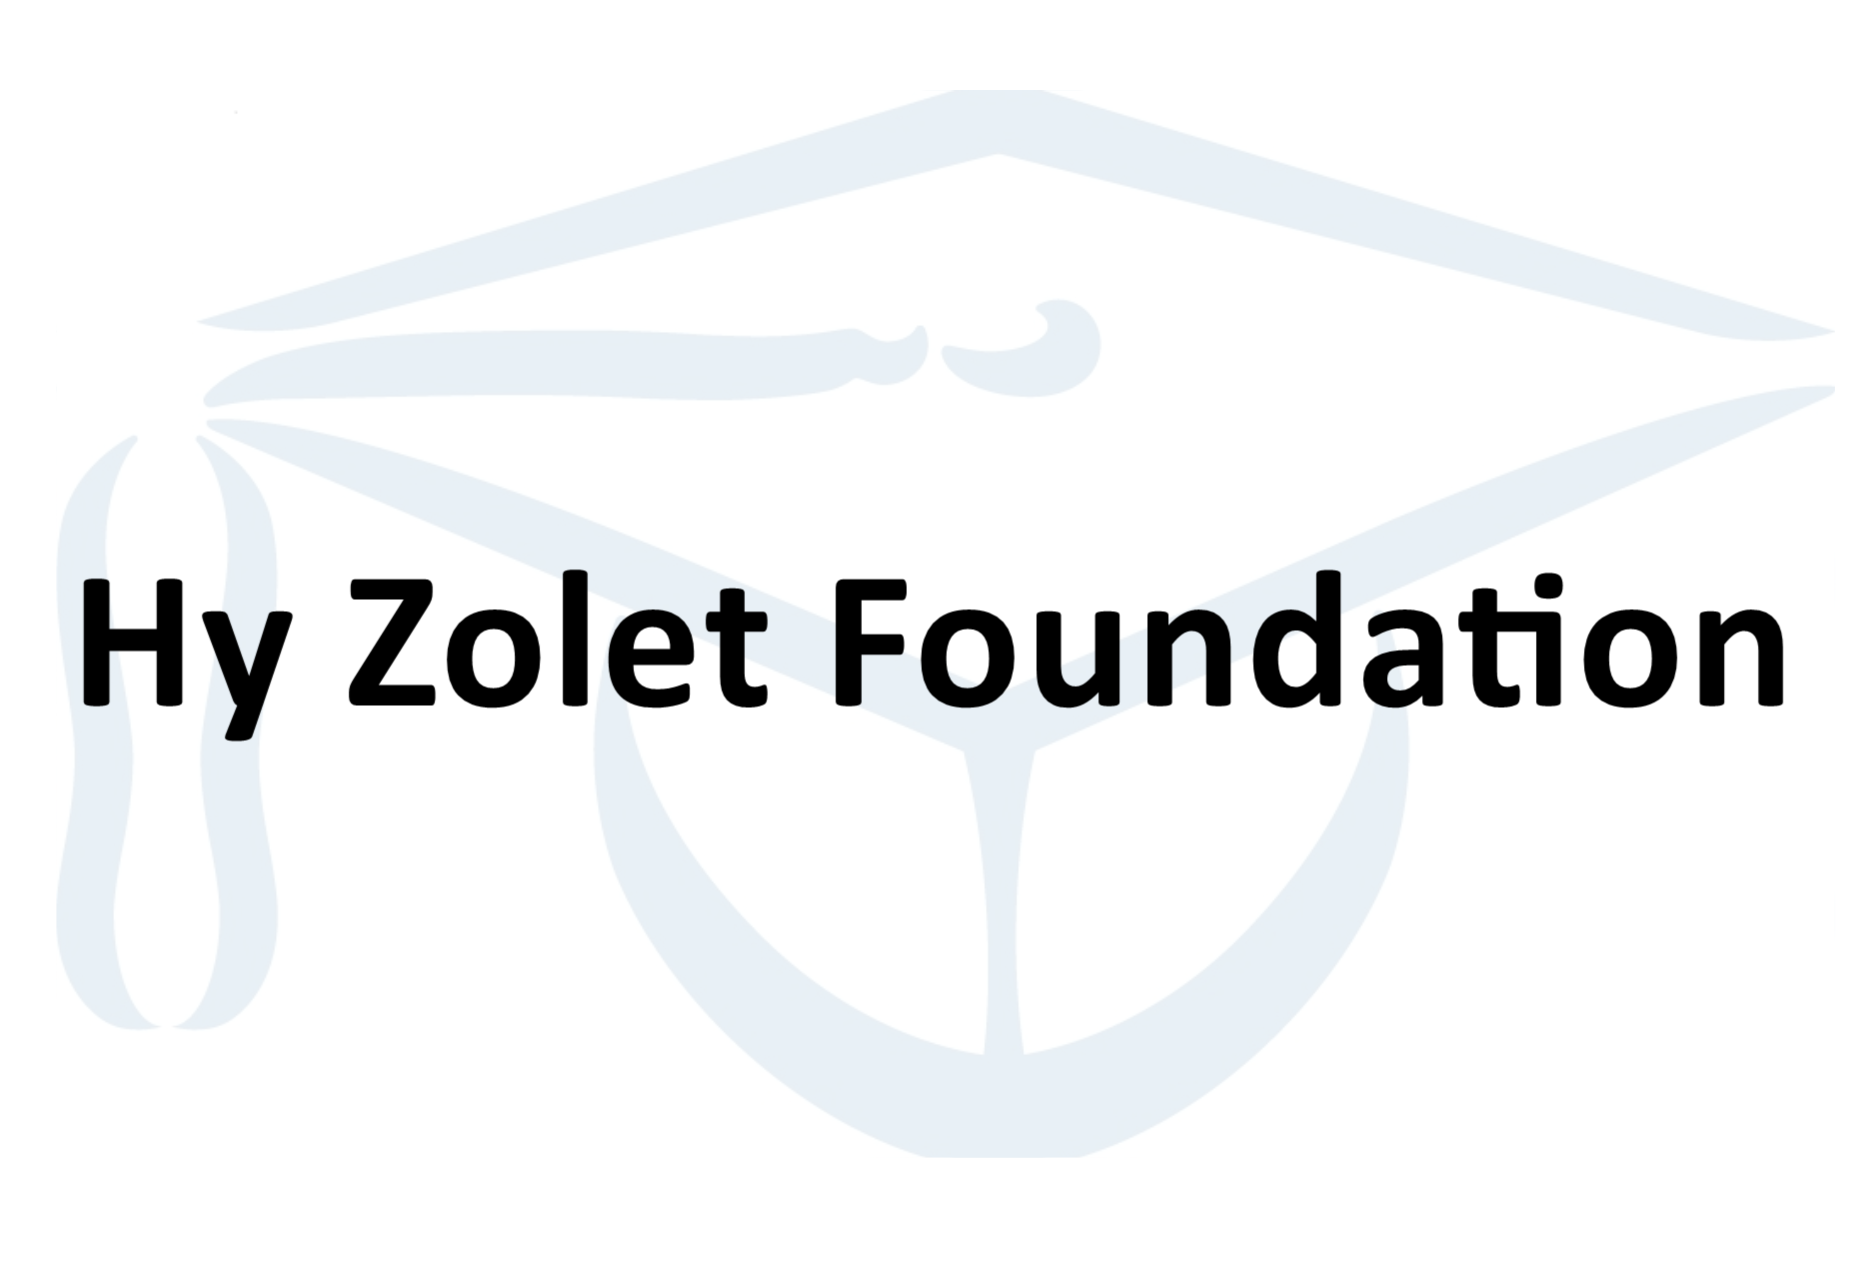 Hy Zolet Foundation 